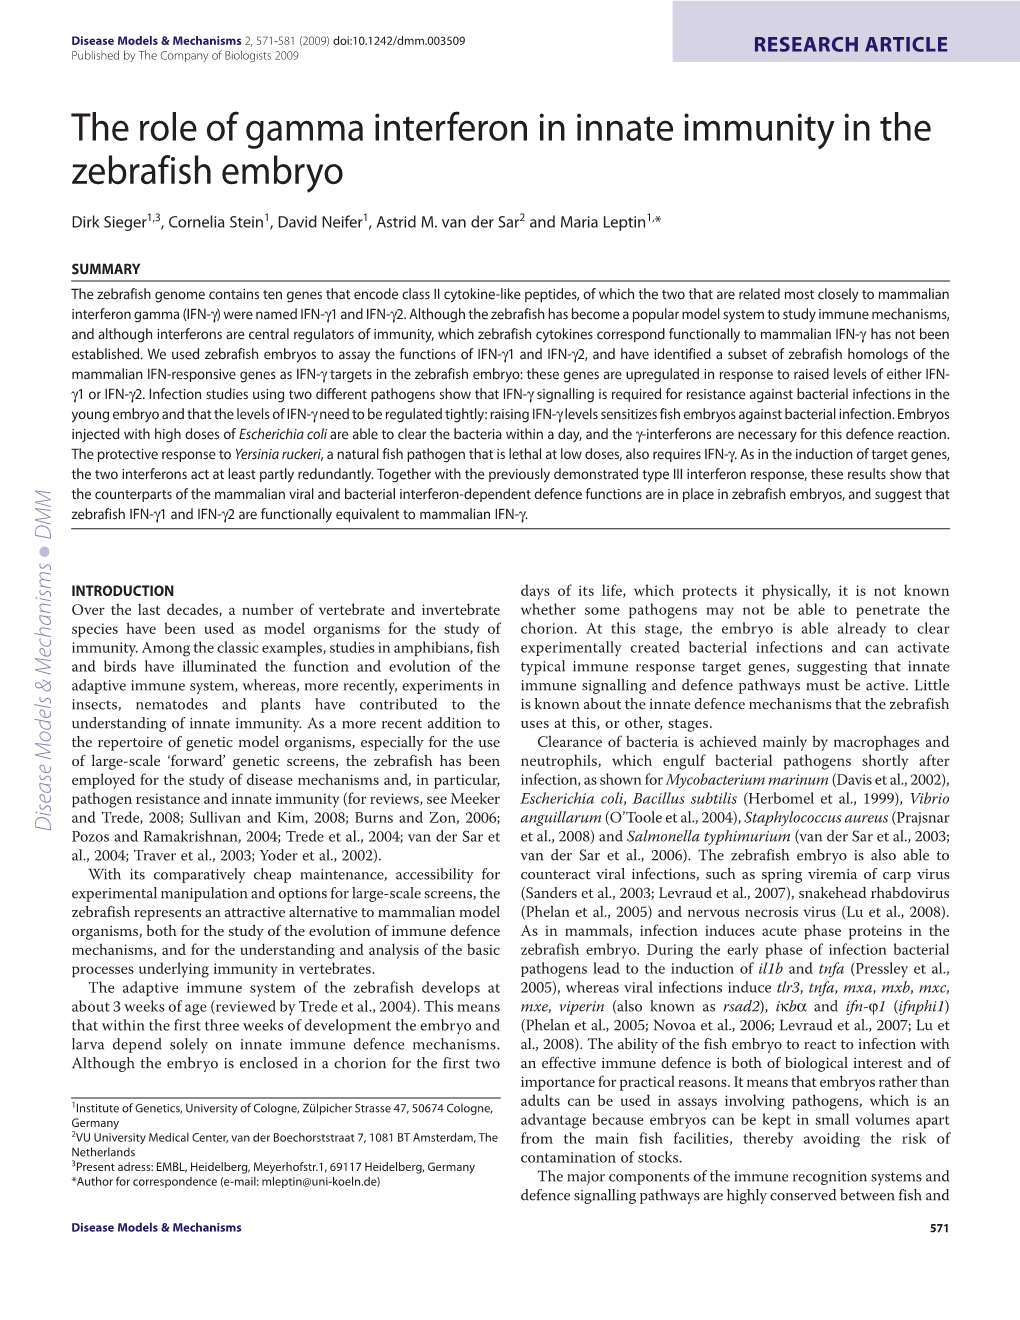 The Role of Gamma Interferon in Innate Immunity in the Zebrafish Embryo